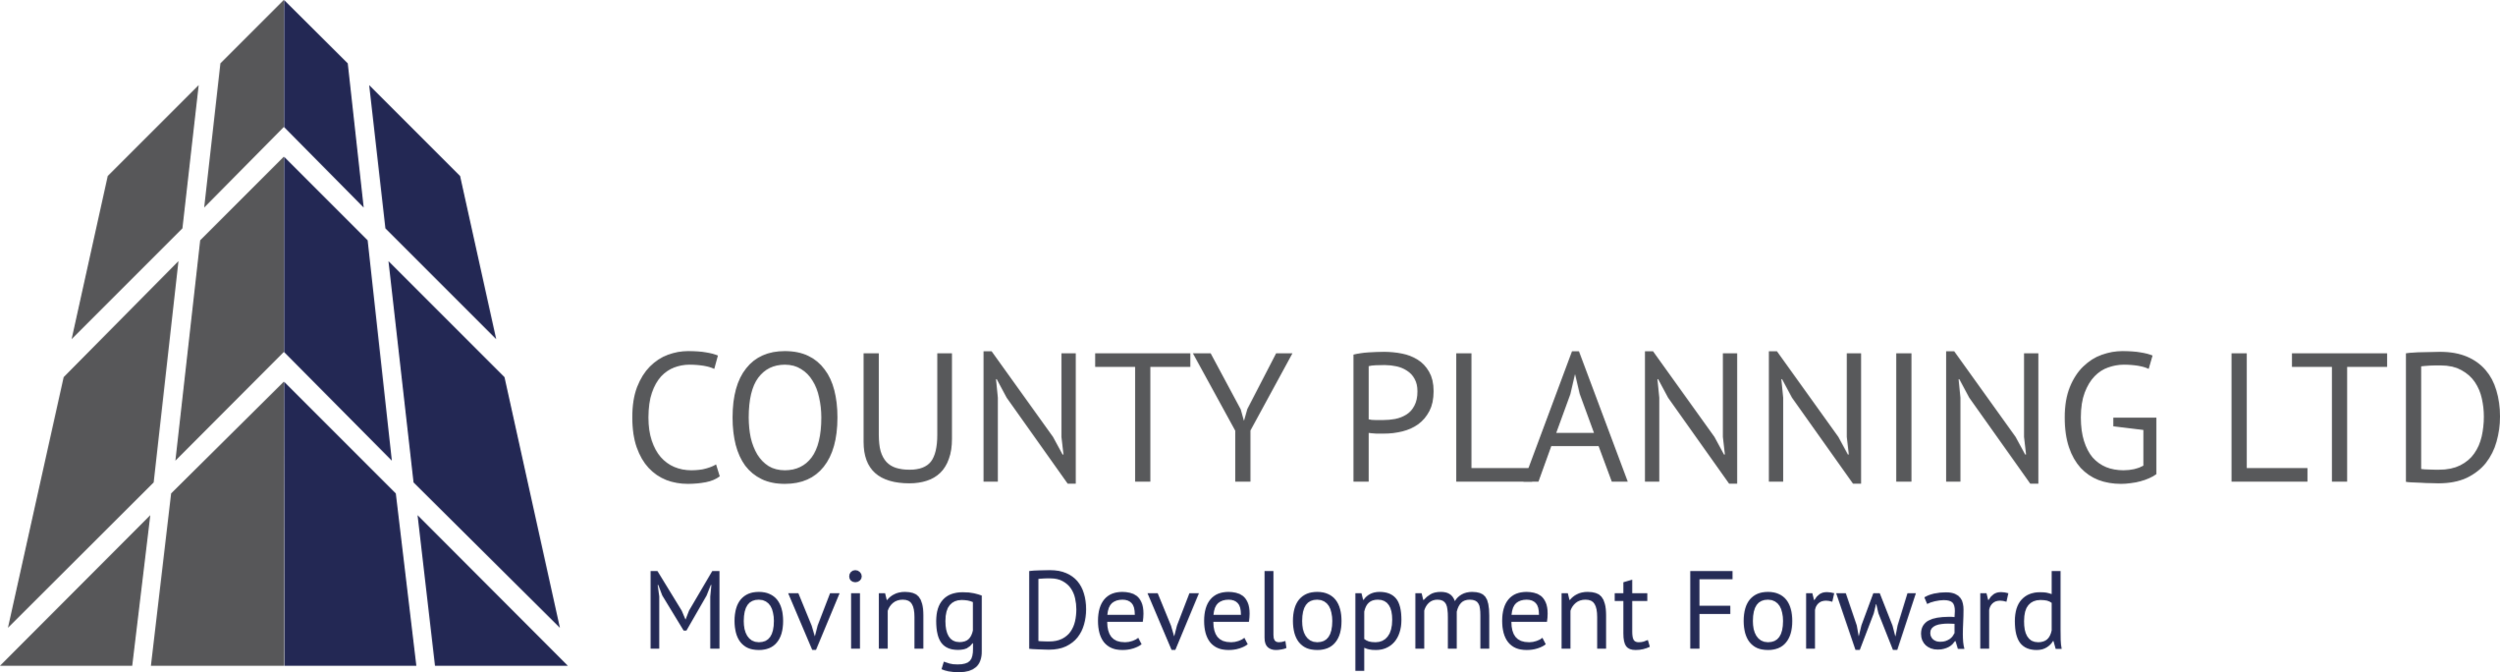 County Planning Ltd